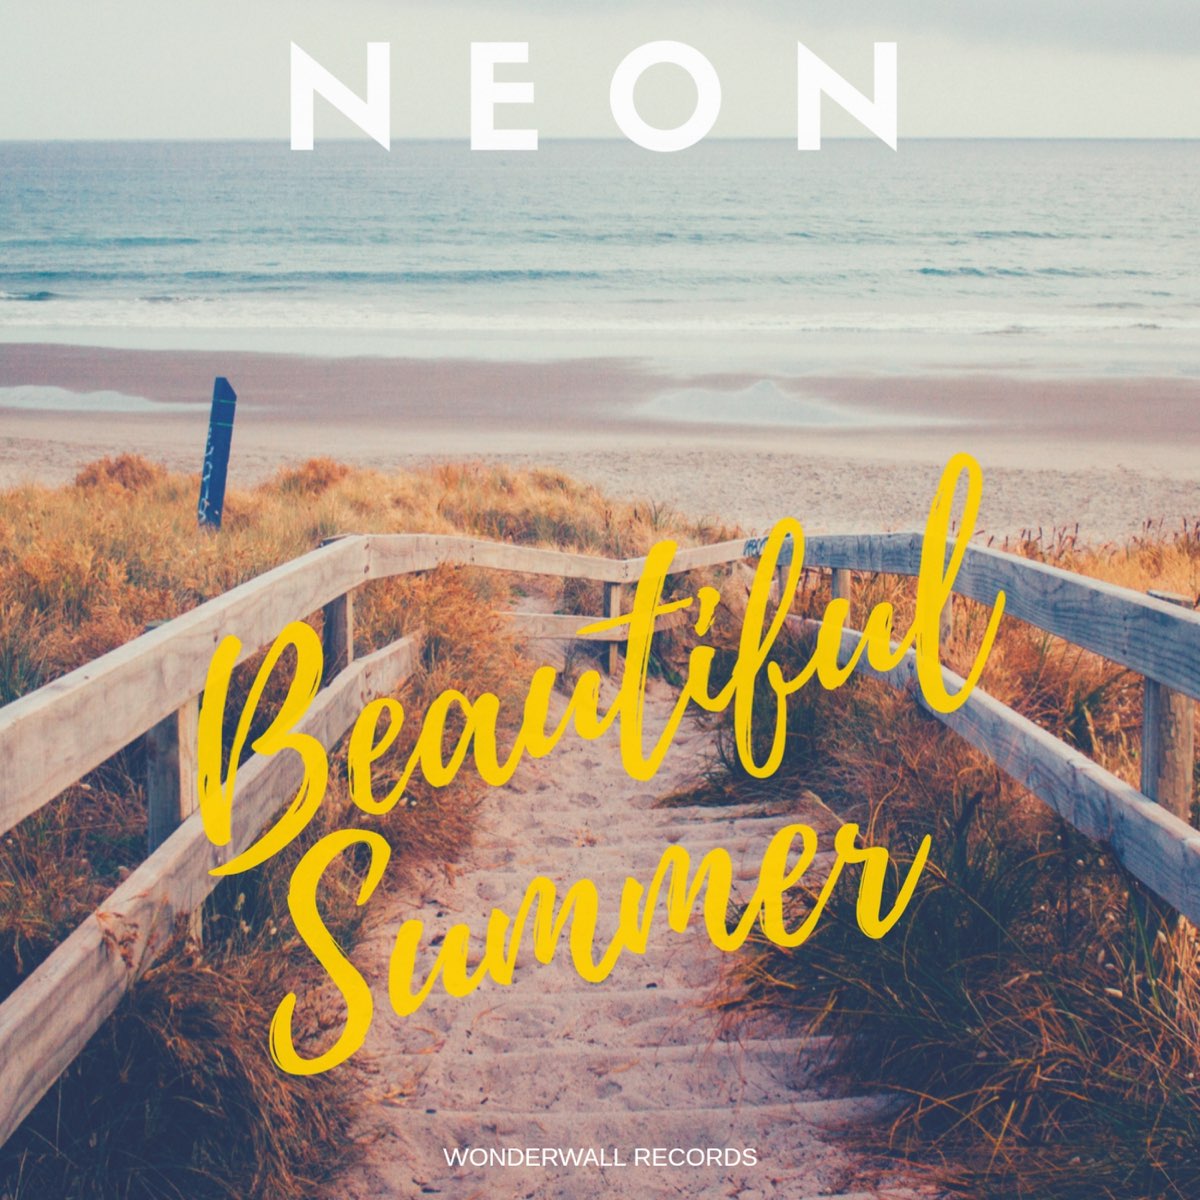 Neon Summer. It was a beautiful summer